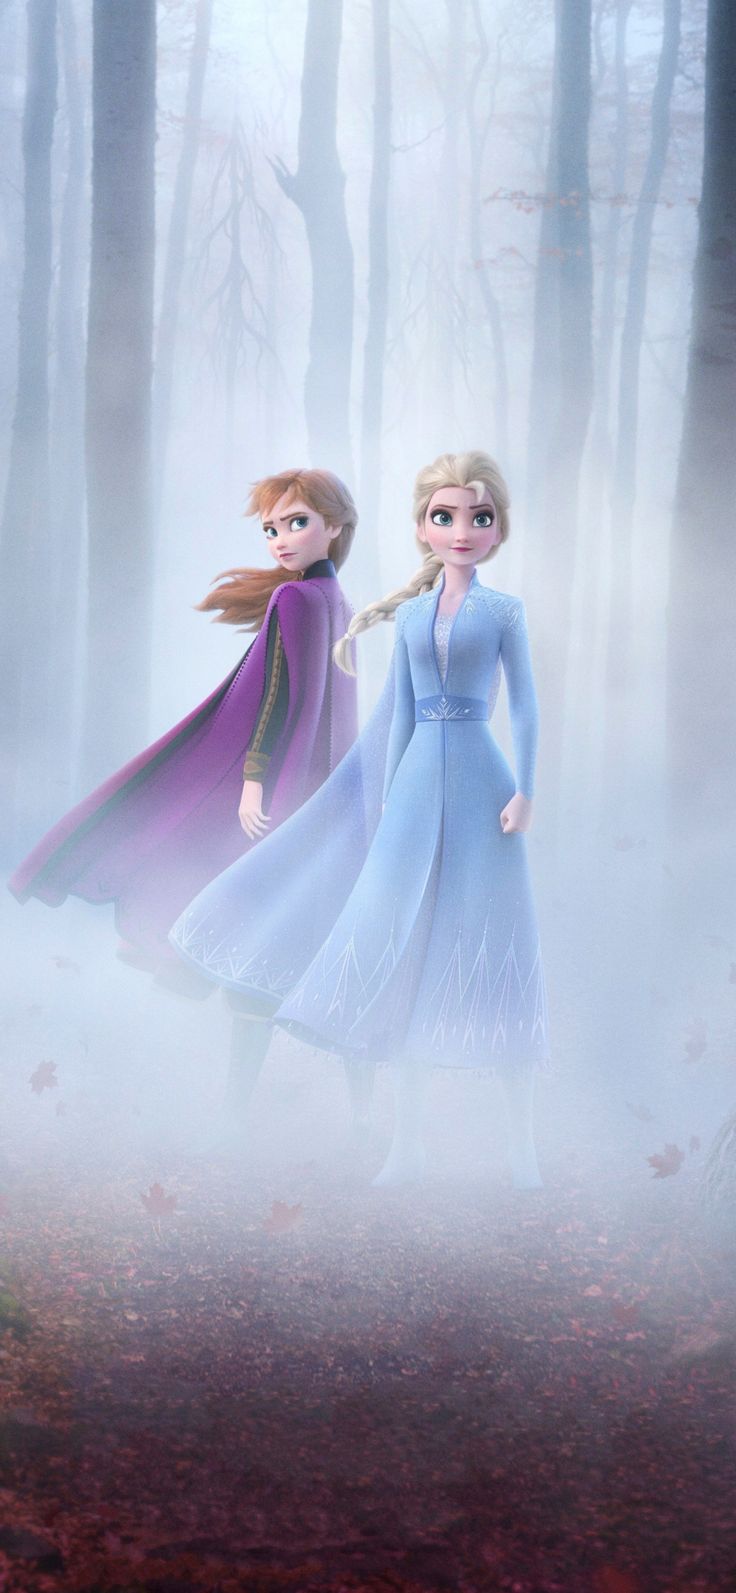 marvelous wallpaper 1125x2436 Frozen Queen Elsa and Anna, movie, 2019 wallpaper Large Image